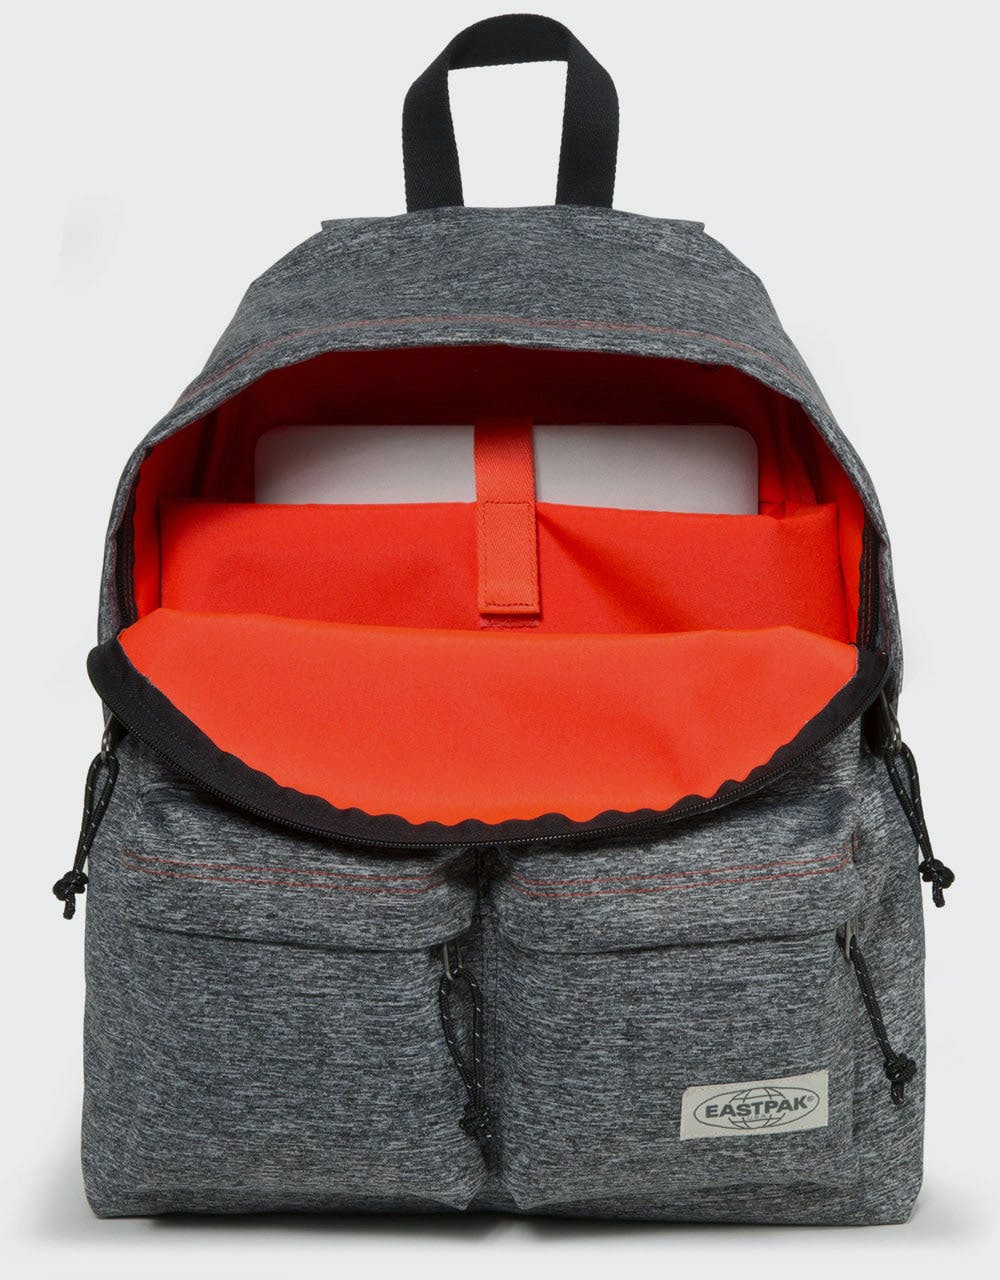 Eastpak Padded Doubl'R Backpack - Dark Jersey